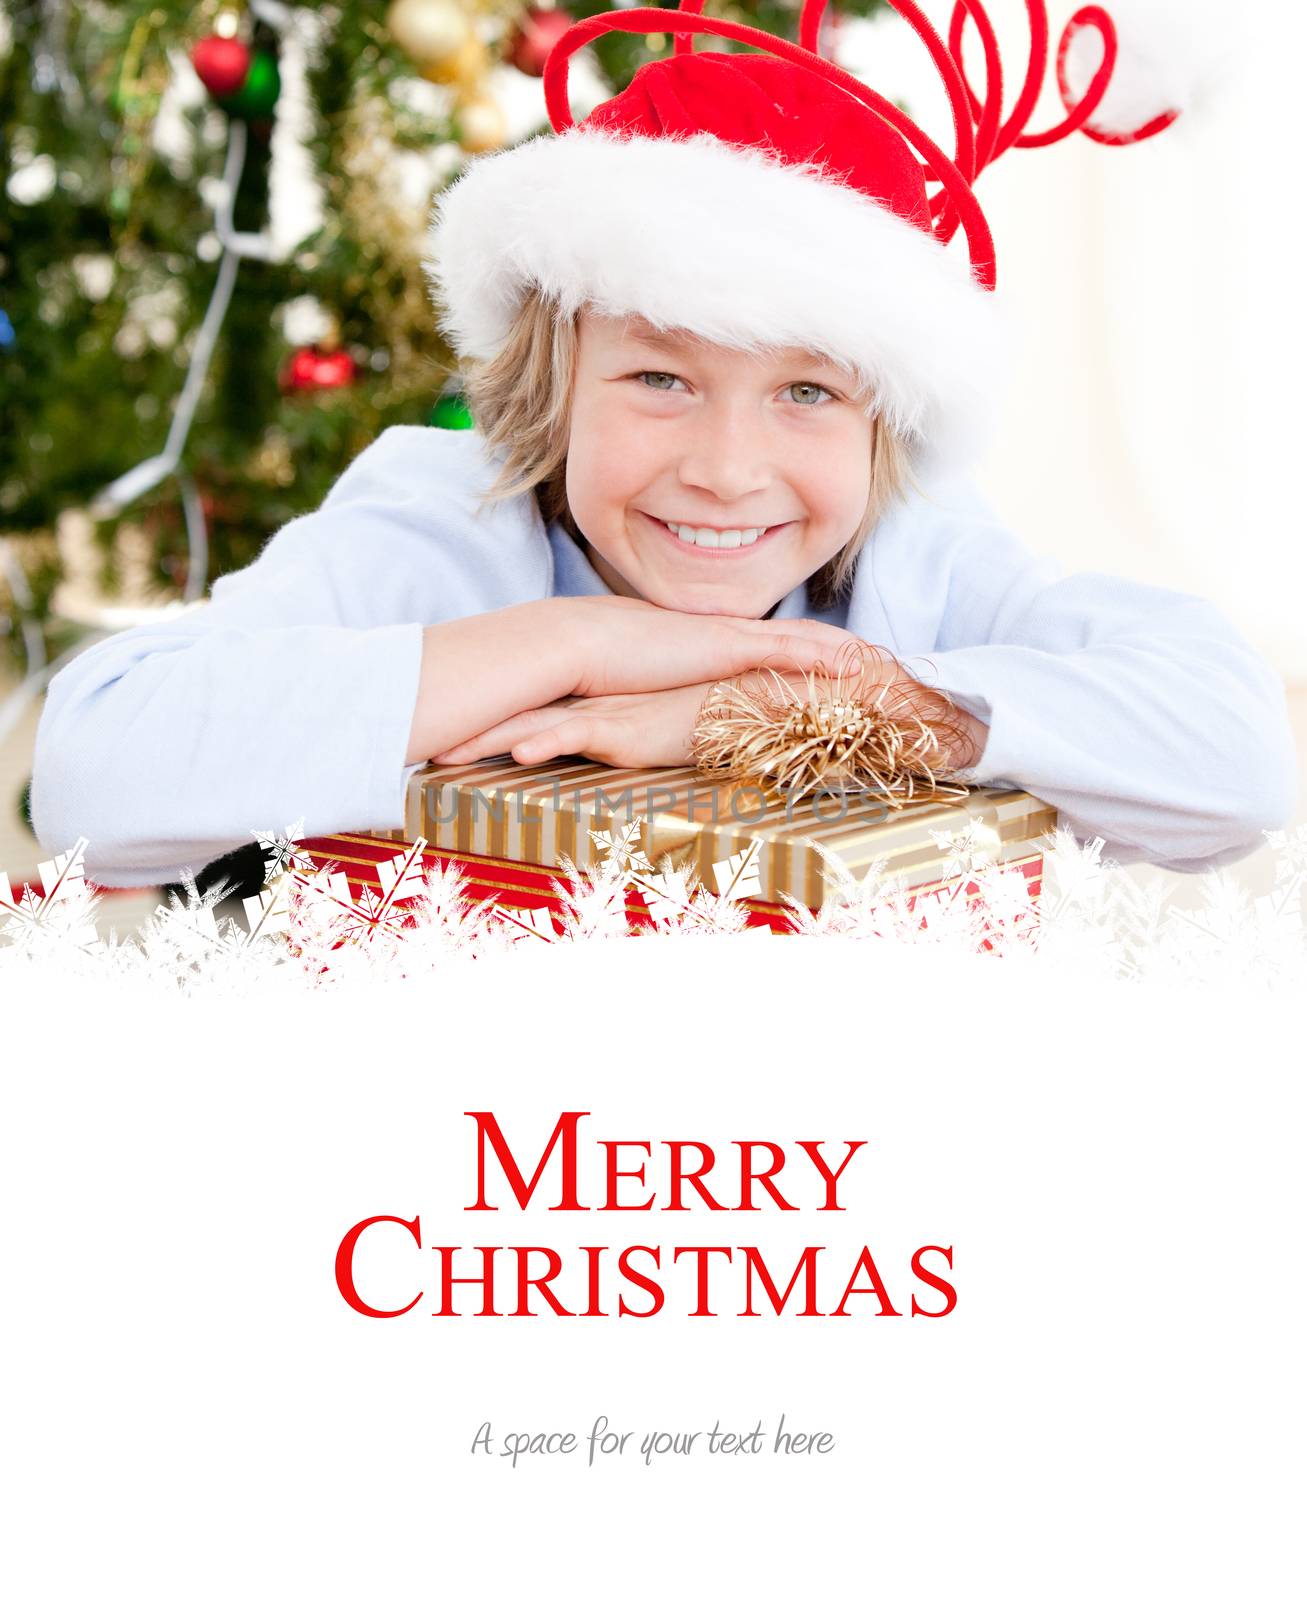 Adorable child celebrating christmas  against merry christmas